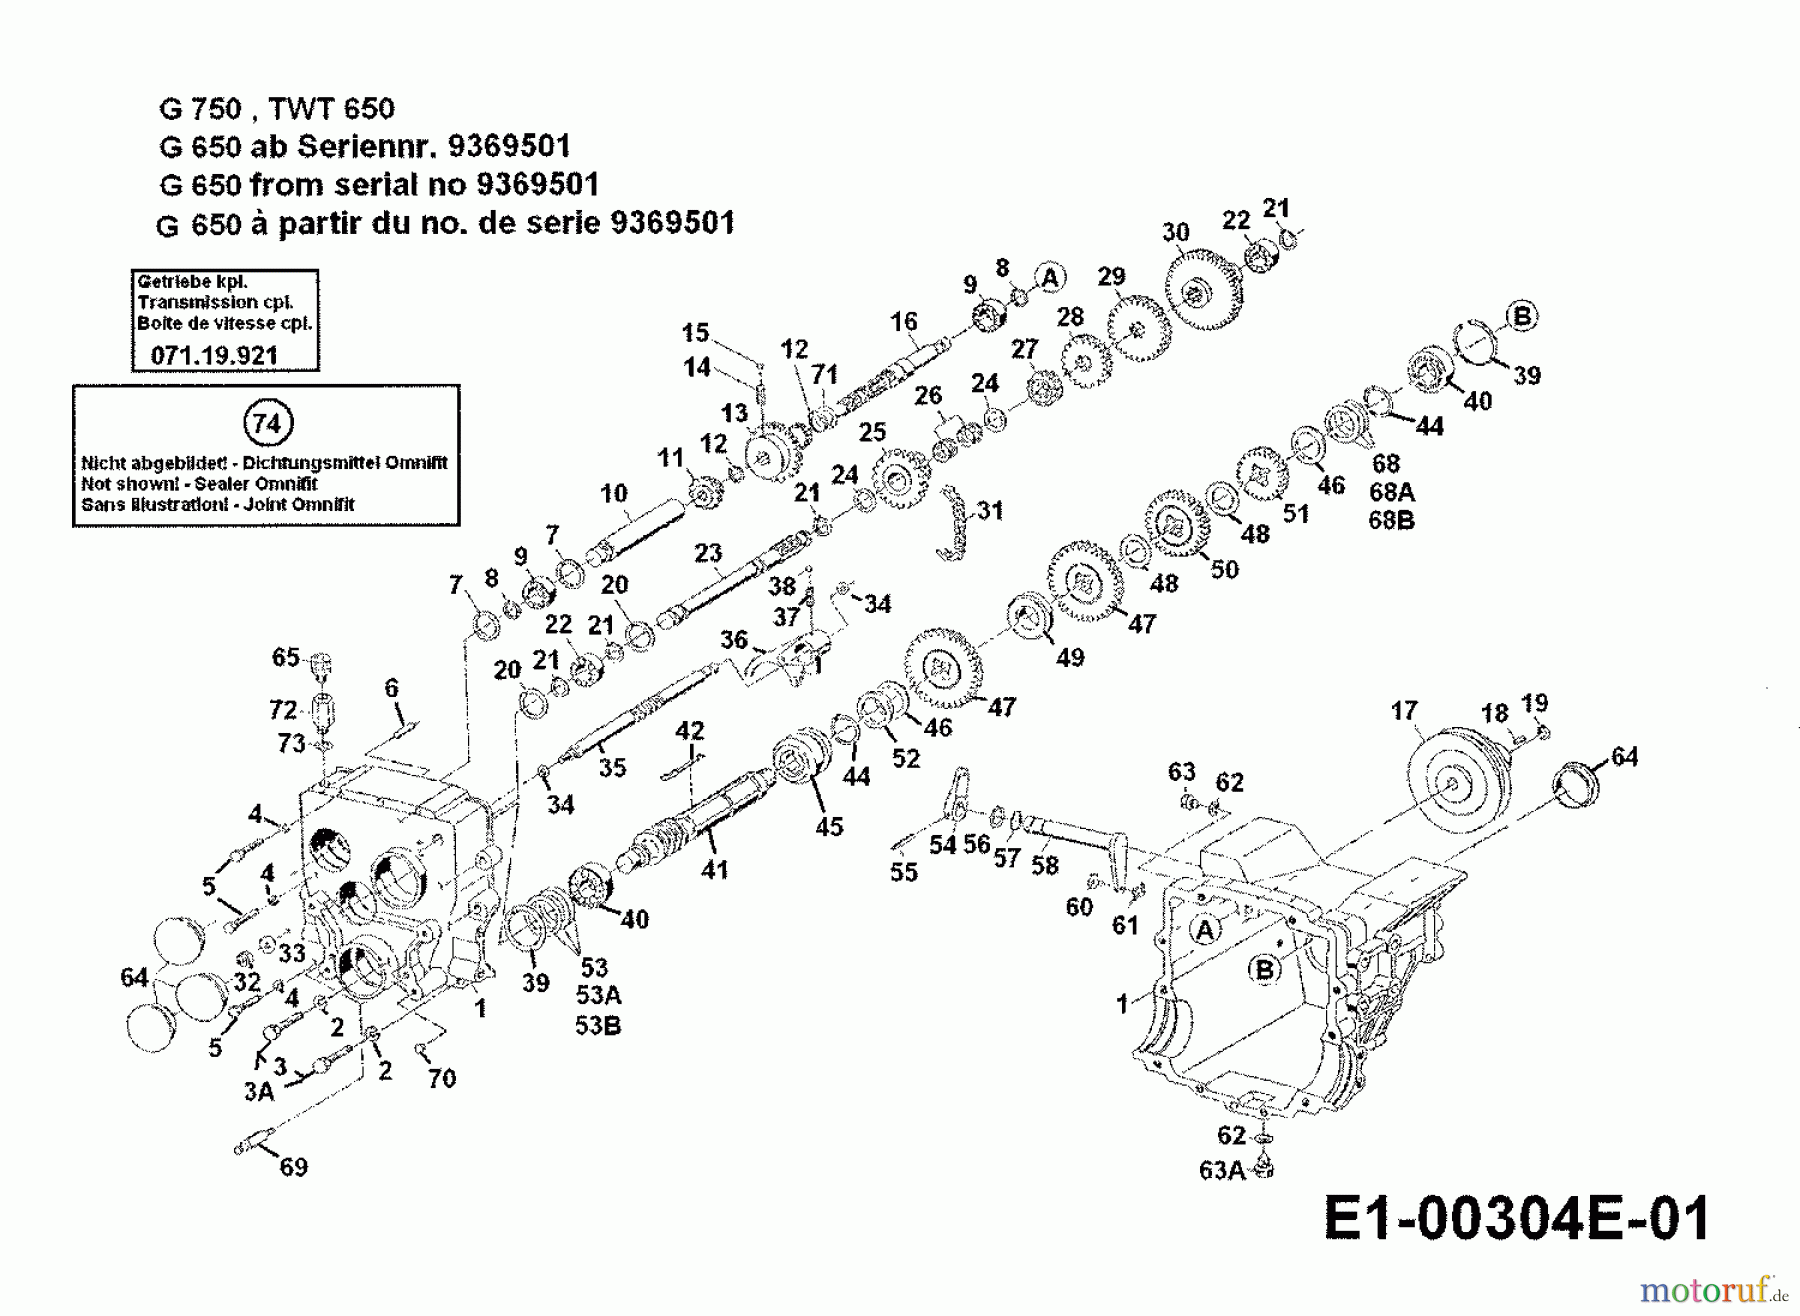  Gutbrod Einachser G 750 56A-750-604  (1998) Getriebe